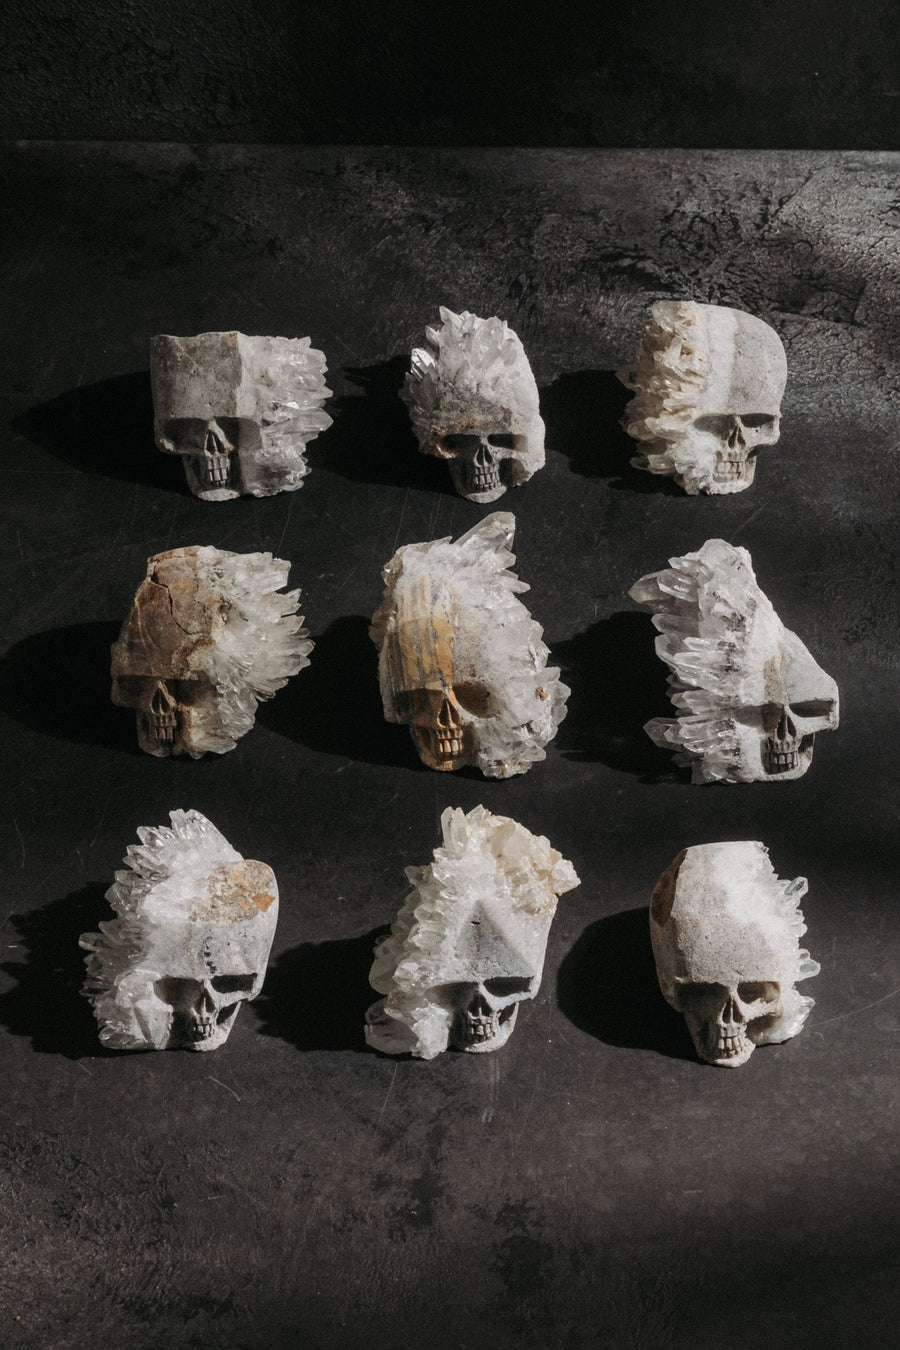 Alibaba Objects Copy of Resurrection Skull Geodes